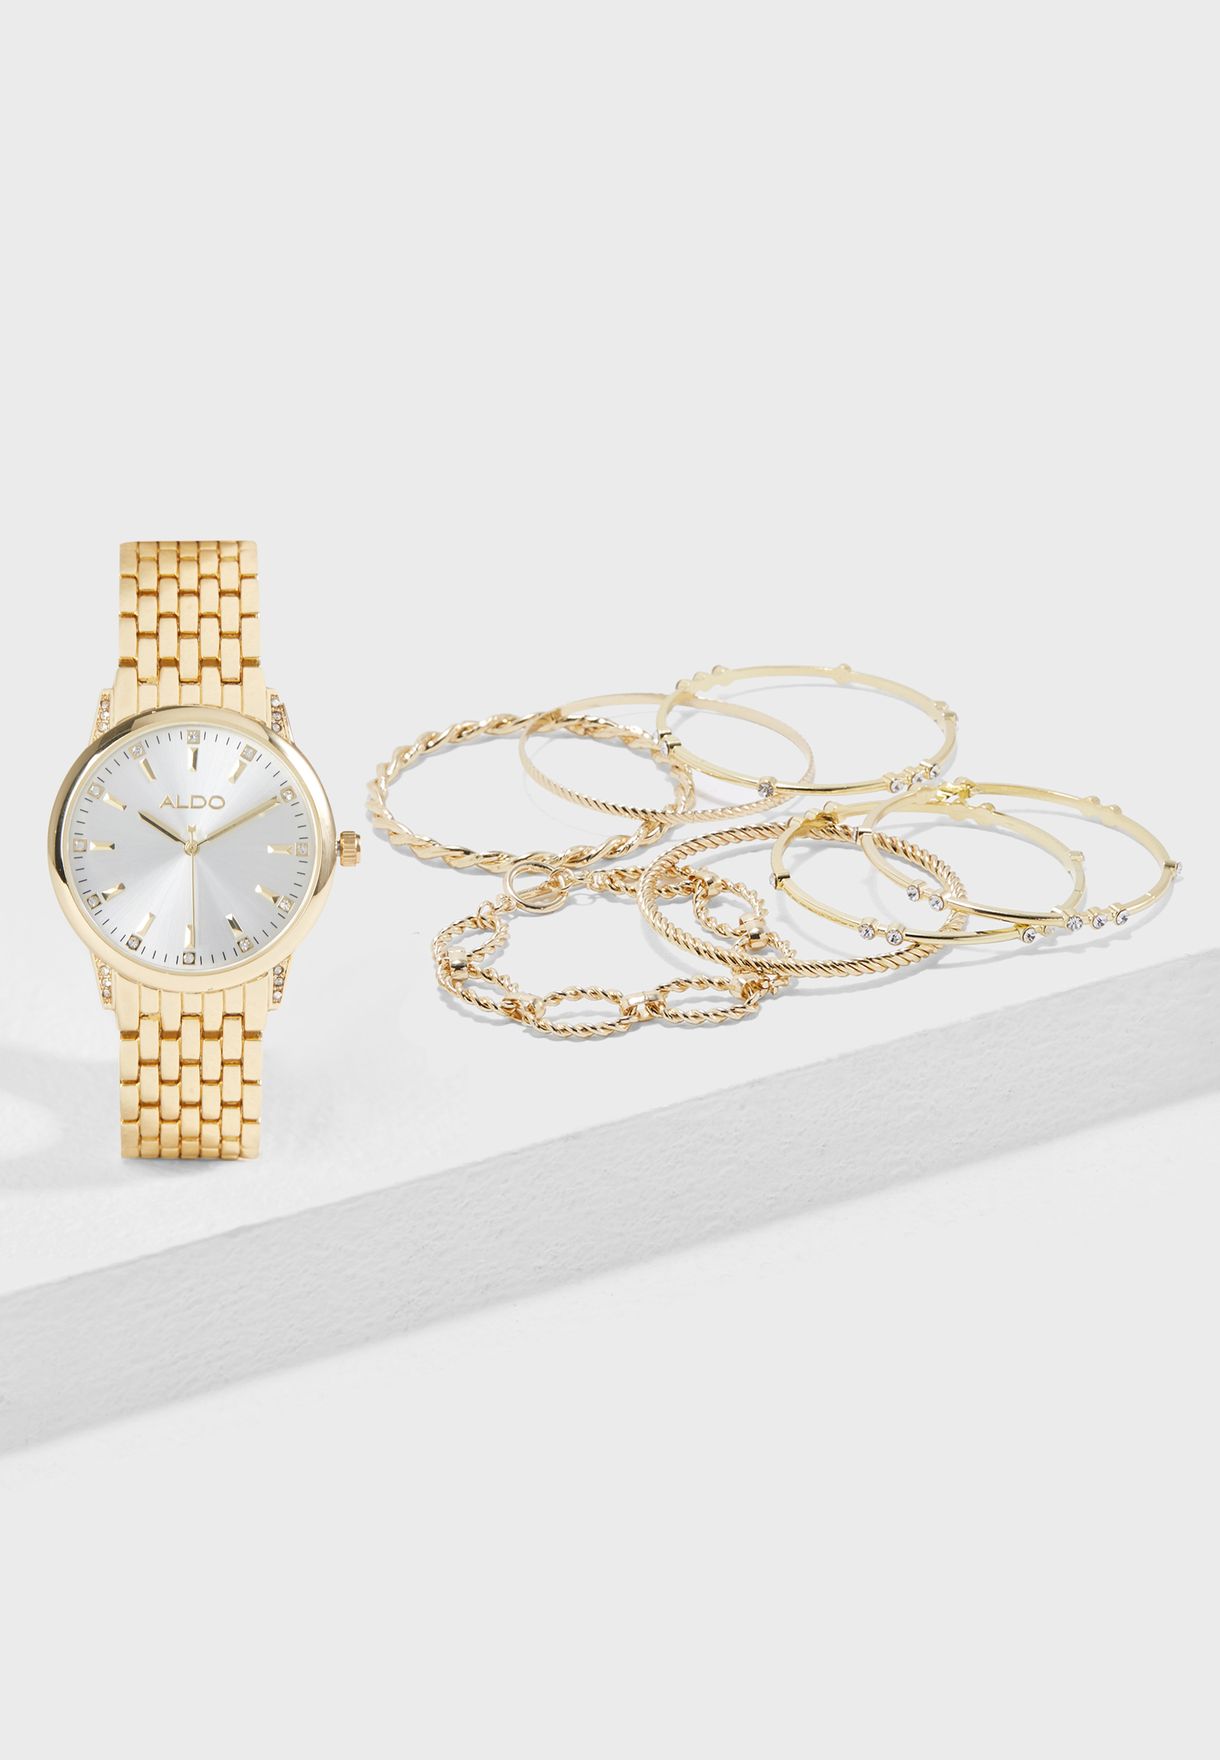 Republik Psykiatri Snavset Buy Aldo gold Watch With Bracelet Set for Women in Dubai, Abu Dhabi